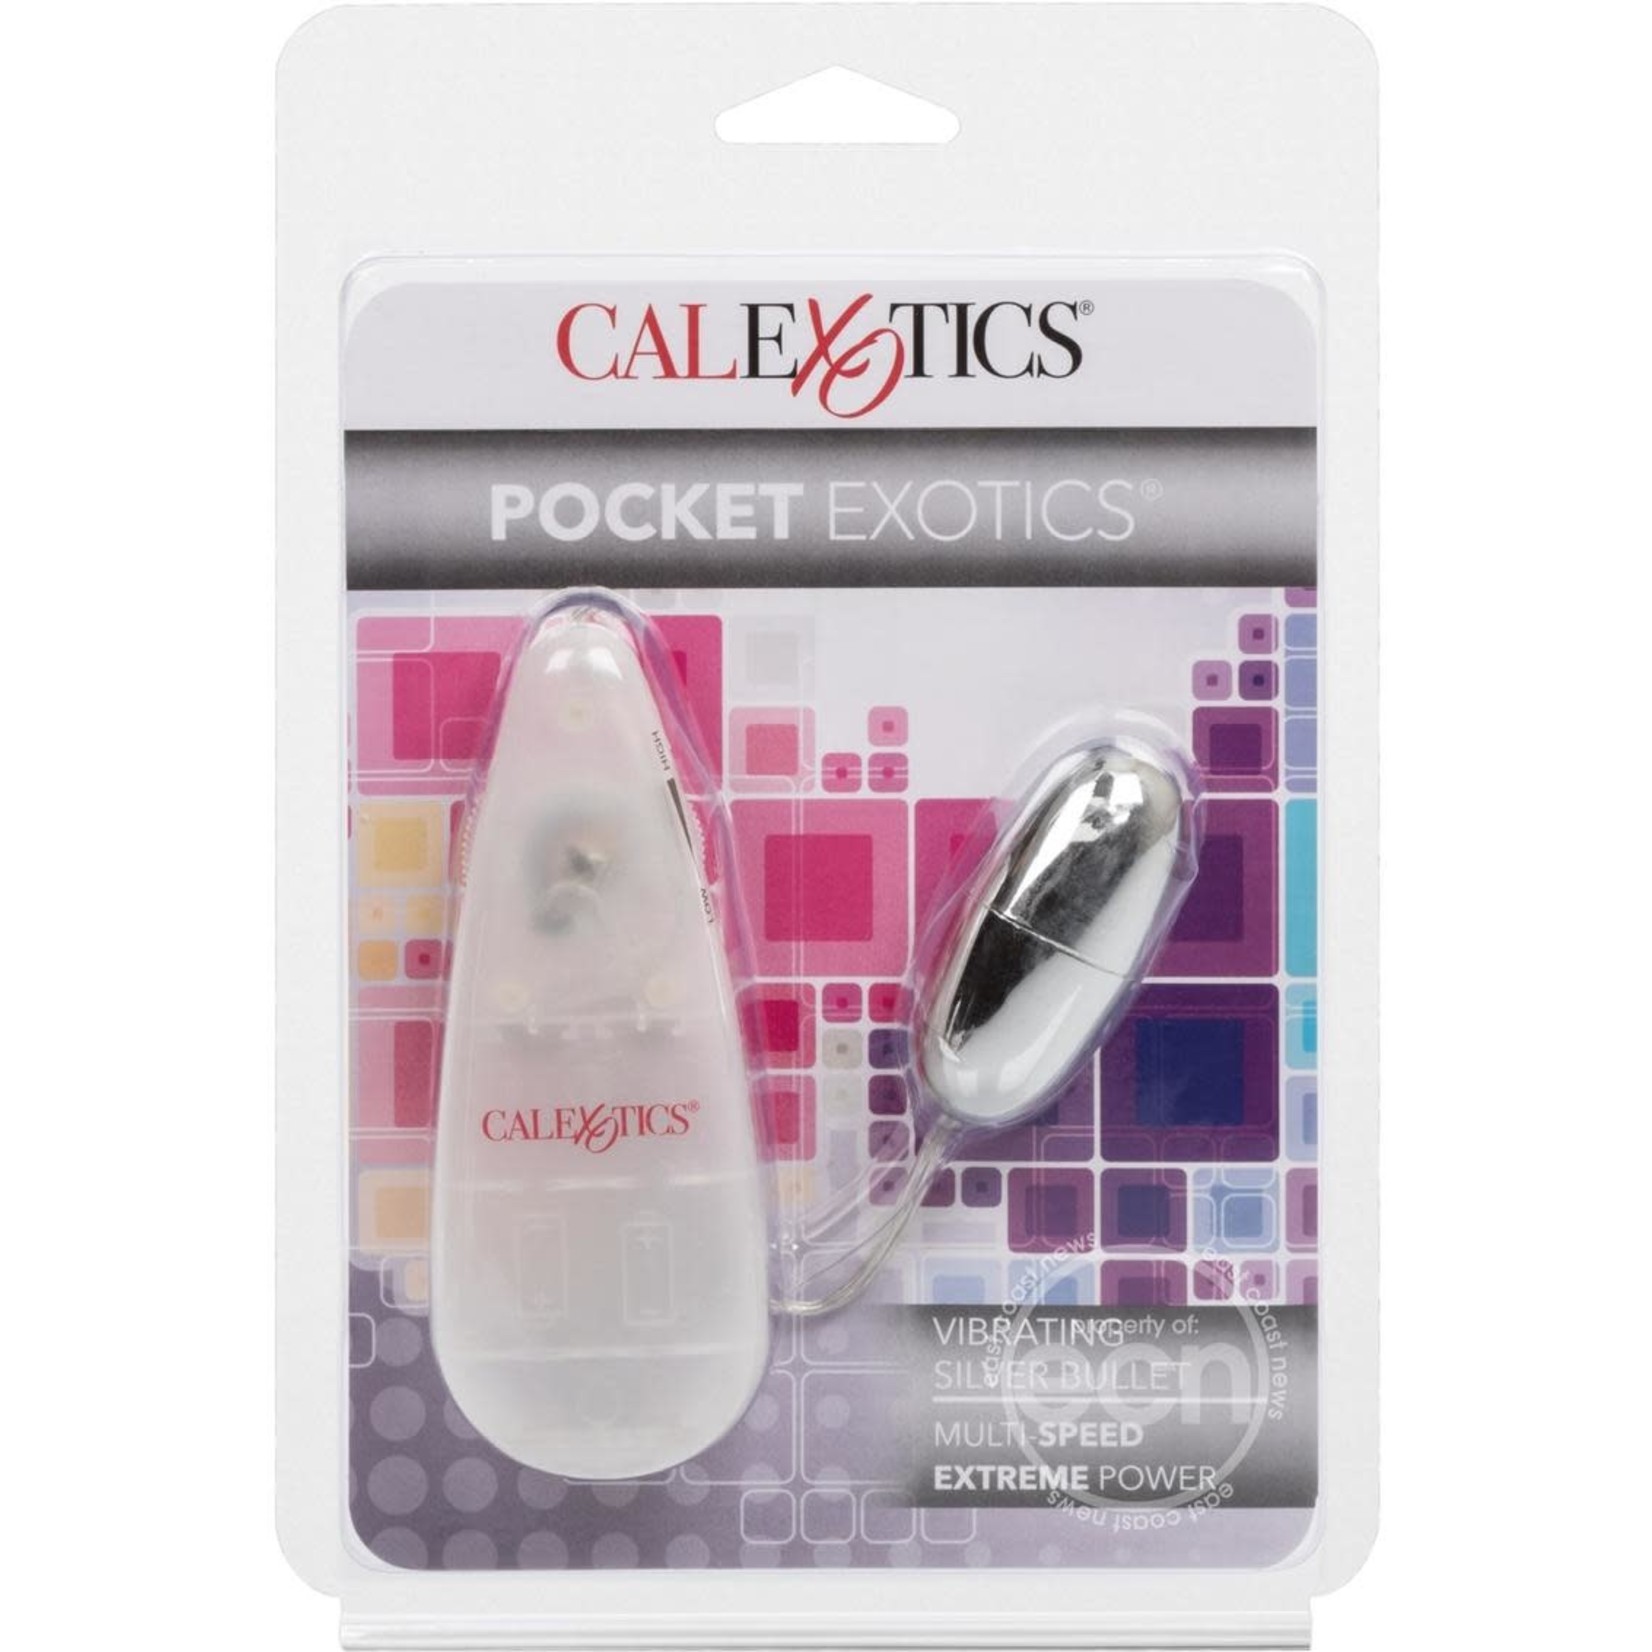 Pocket Exotics Vibrating Silver Bullet - Silver